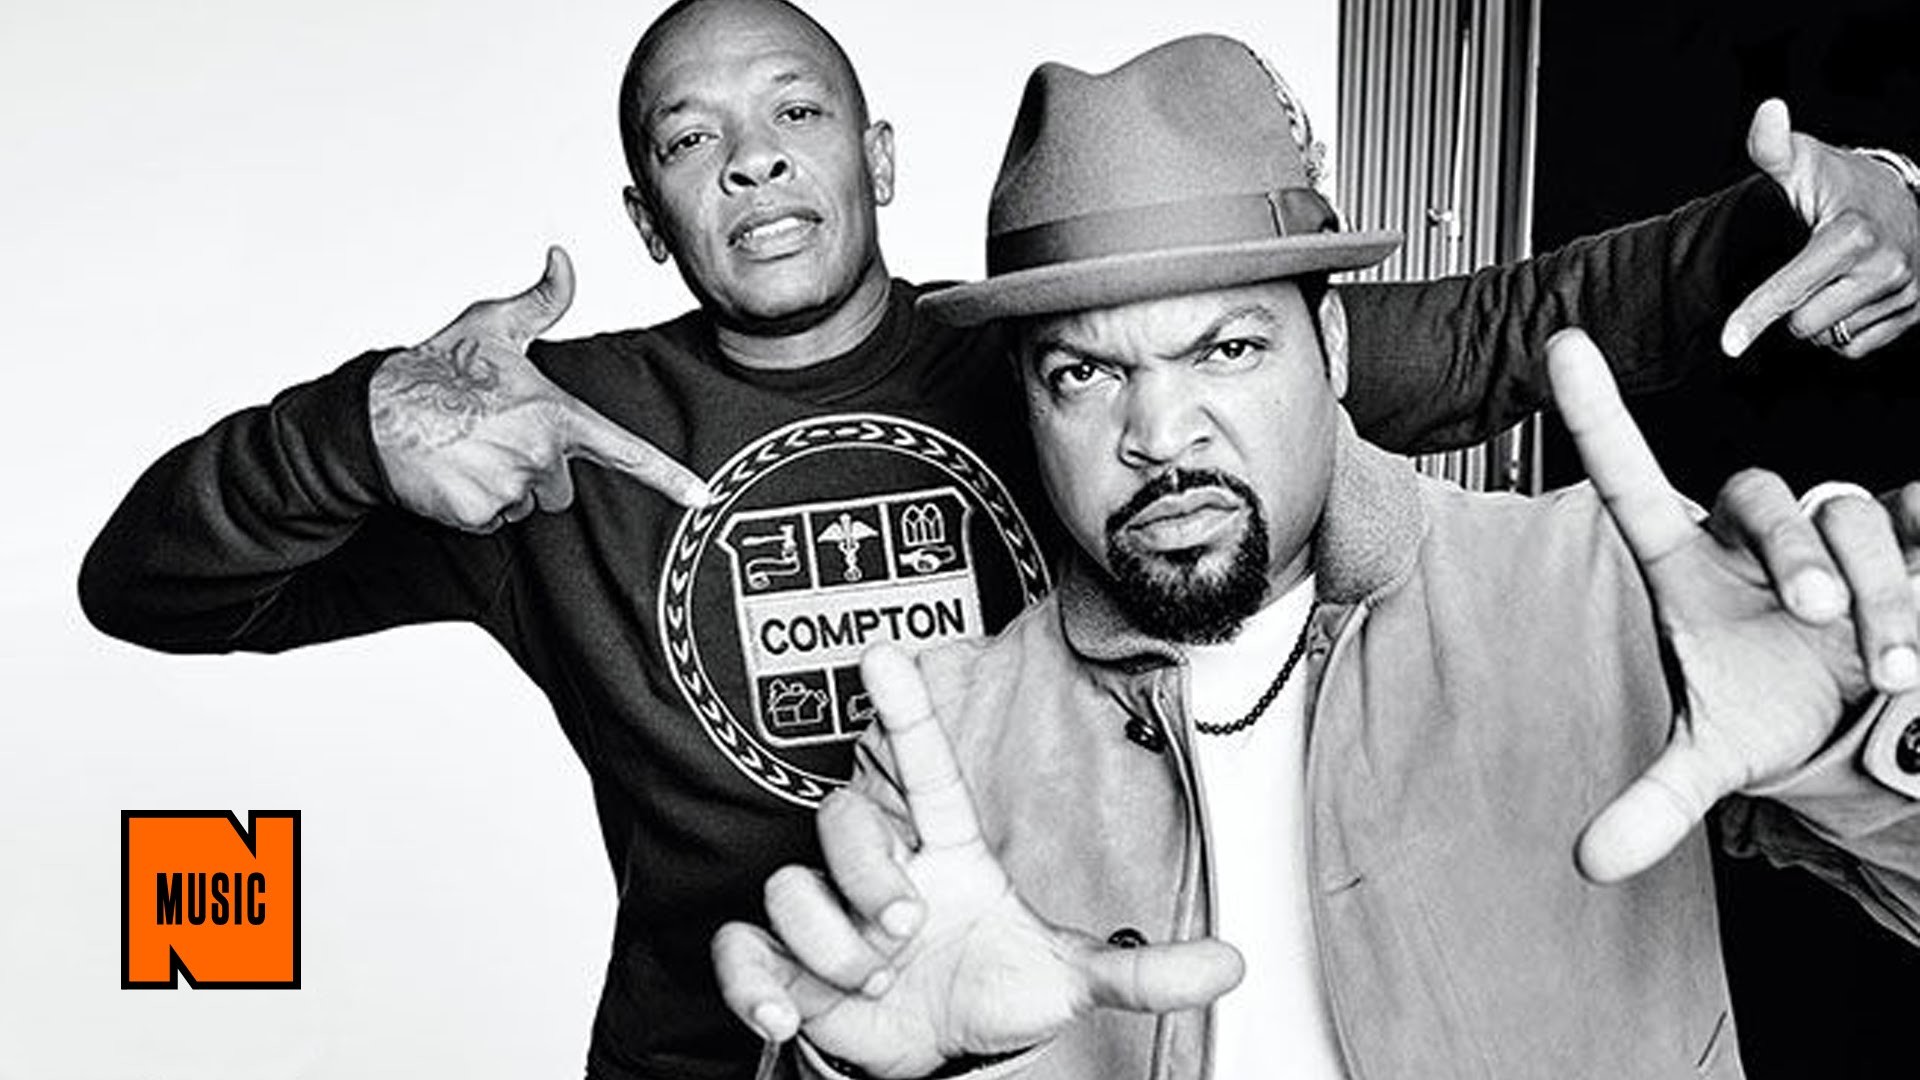 Ice cube ft eminem. Ice Cube и Dr Dre. Айс Кьюб и Эминем. Доктор Дре NWA. Доктор Дре голос улиц.